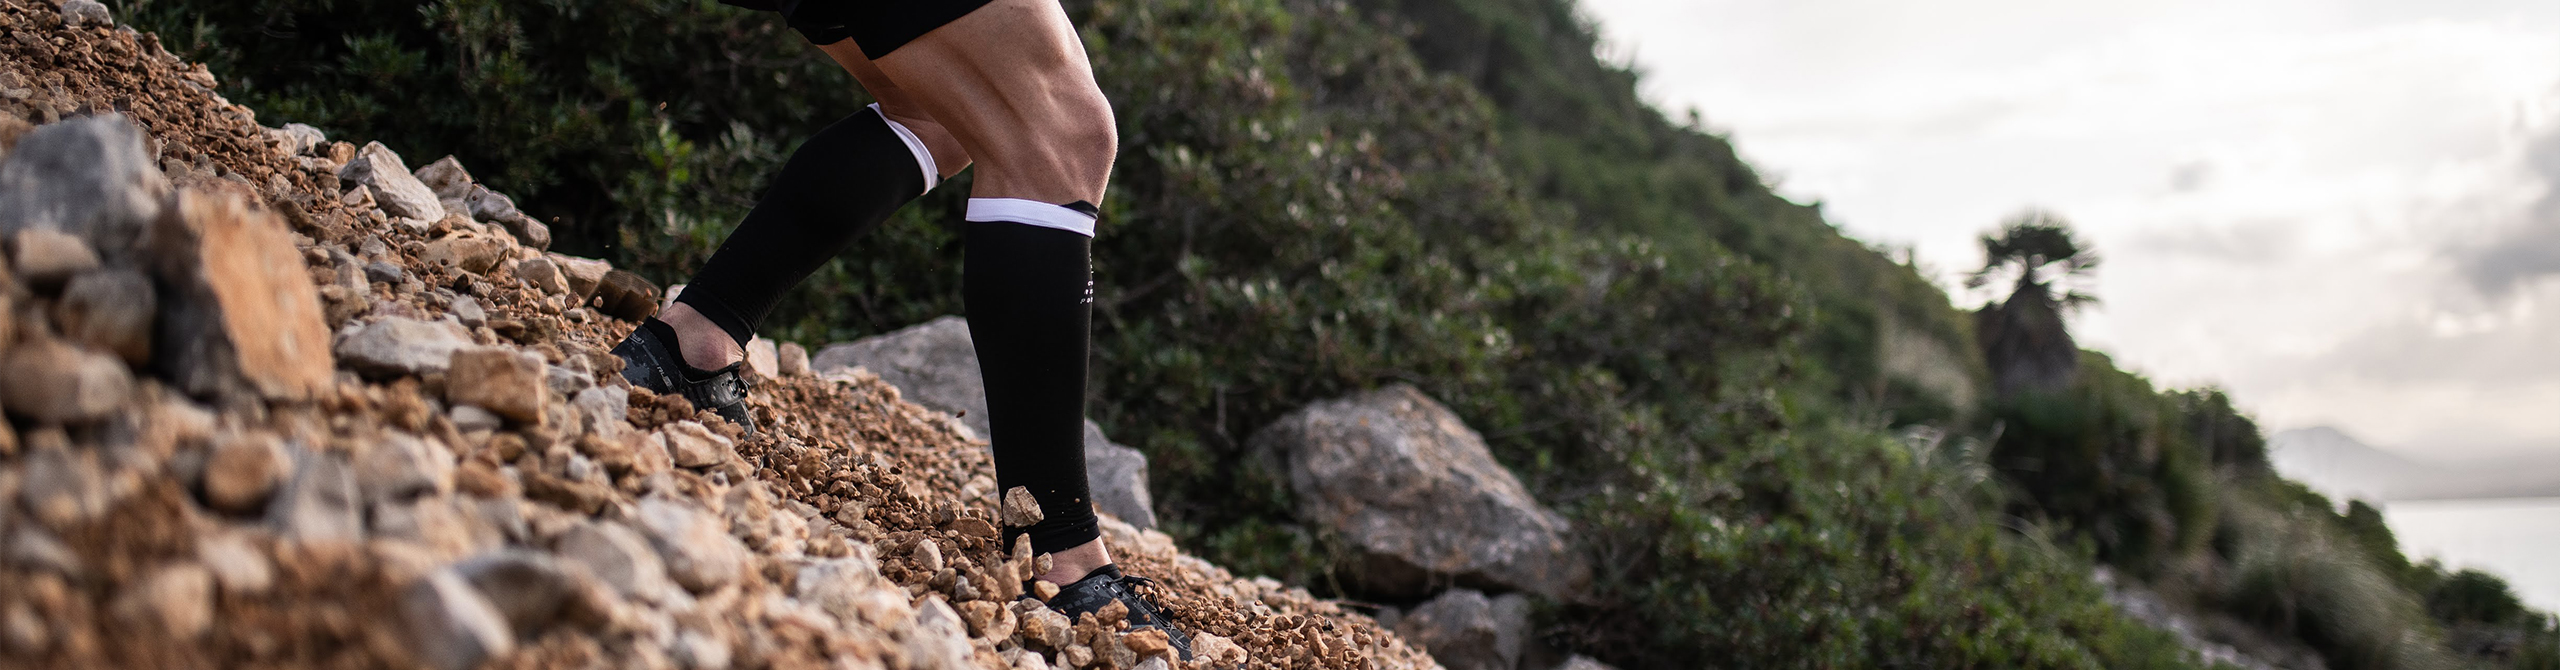 Compressport Ultra Trail Socks - Extremely Insain